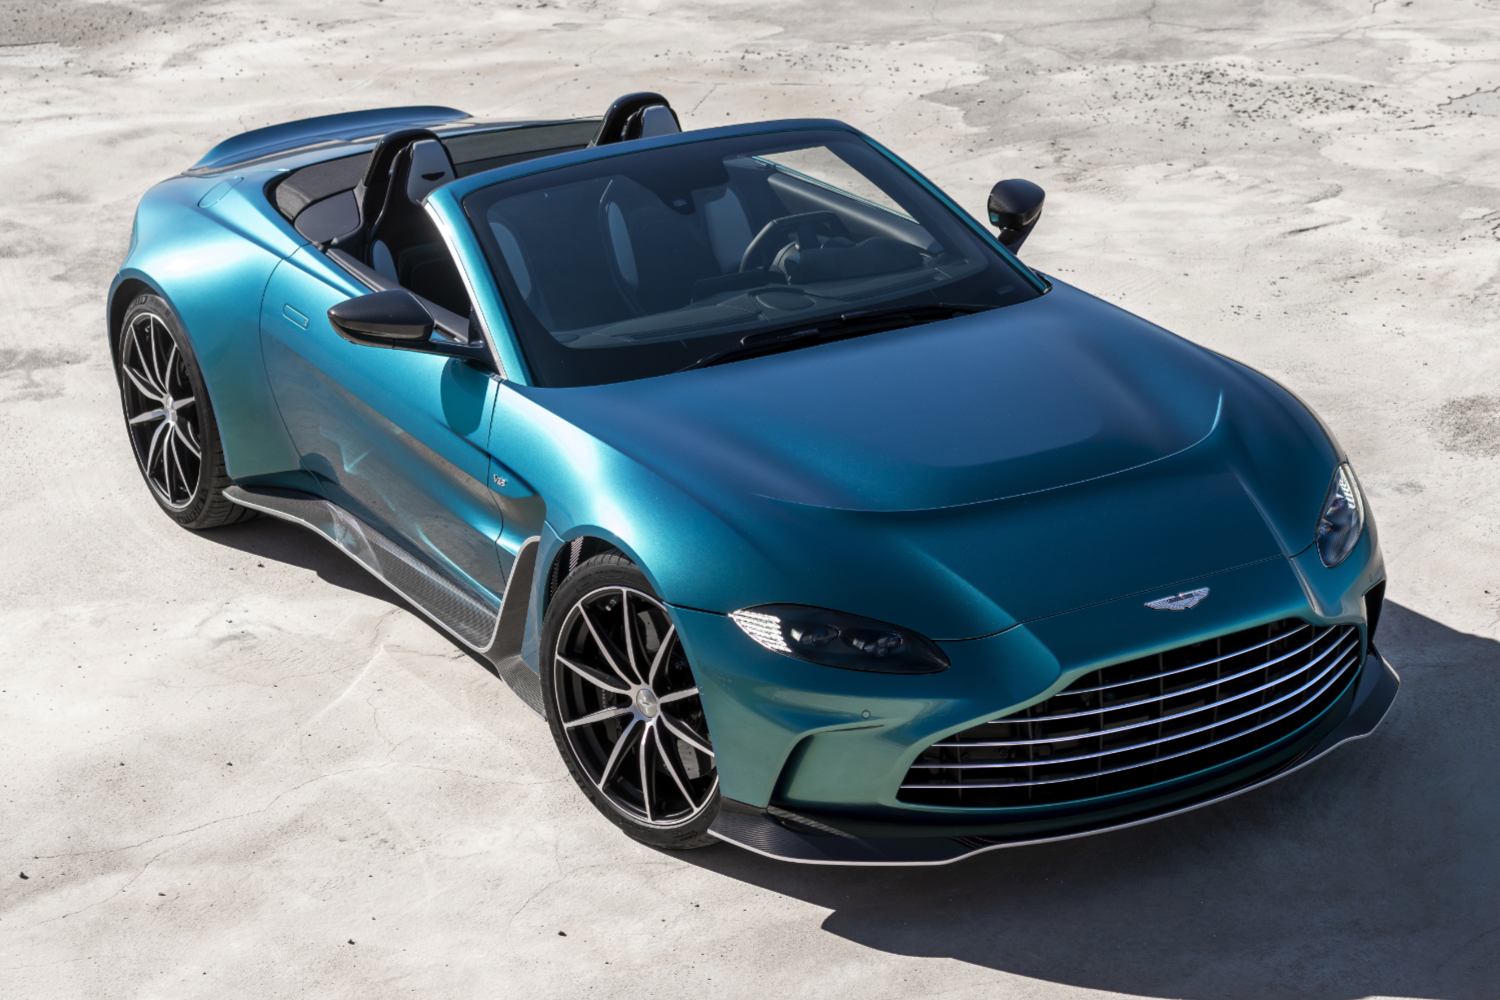 Aston Martin shows off new drop-top V12 Vantage. Image by Aston Martin.